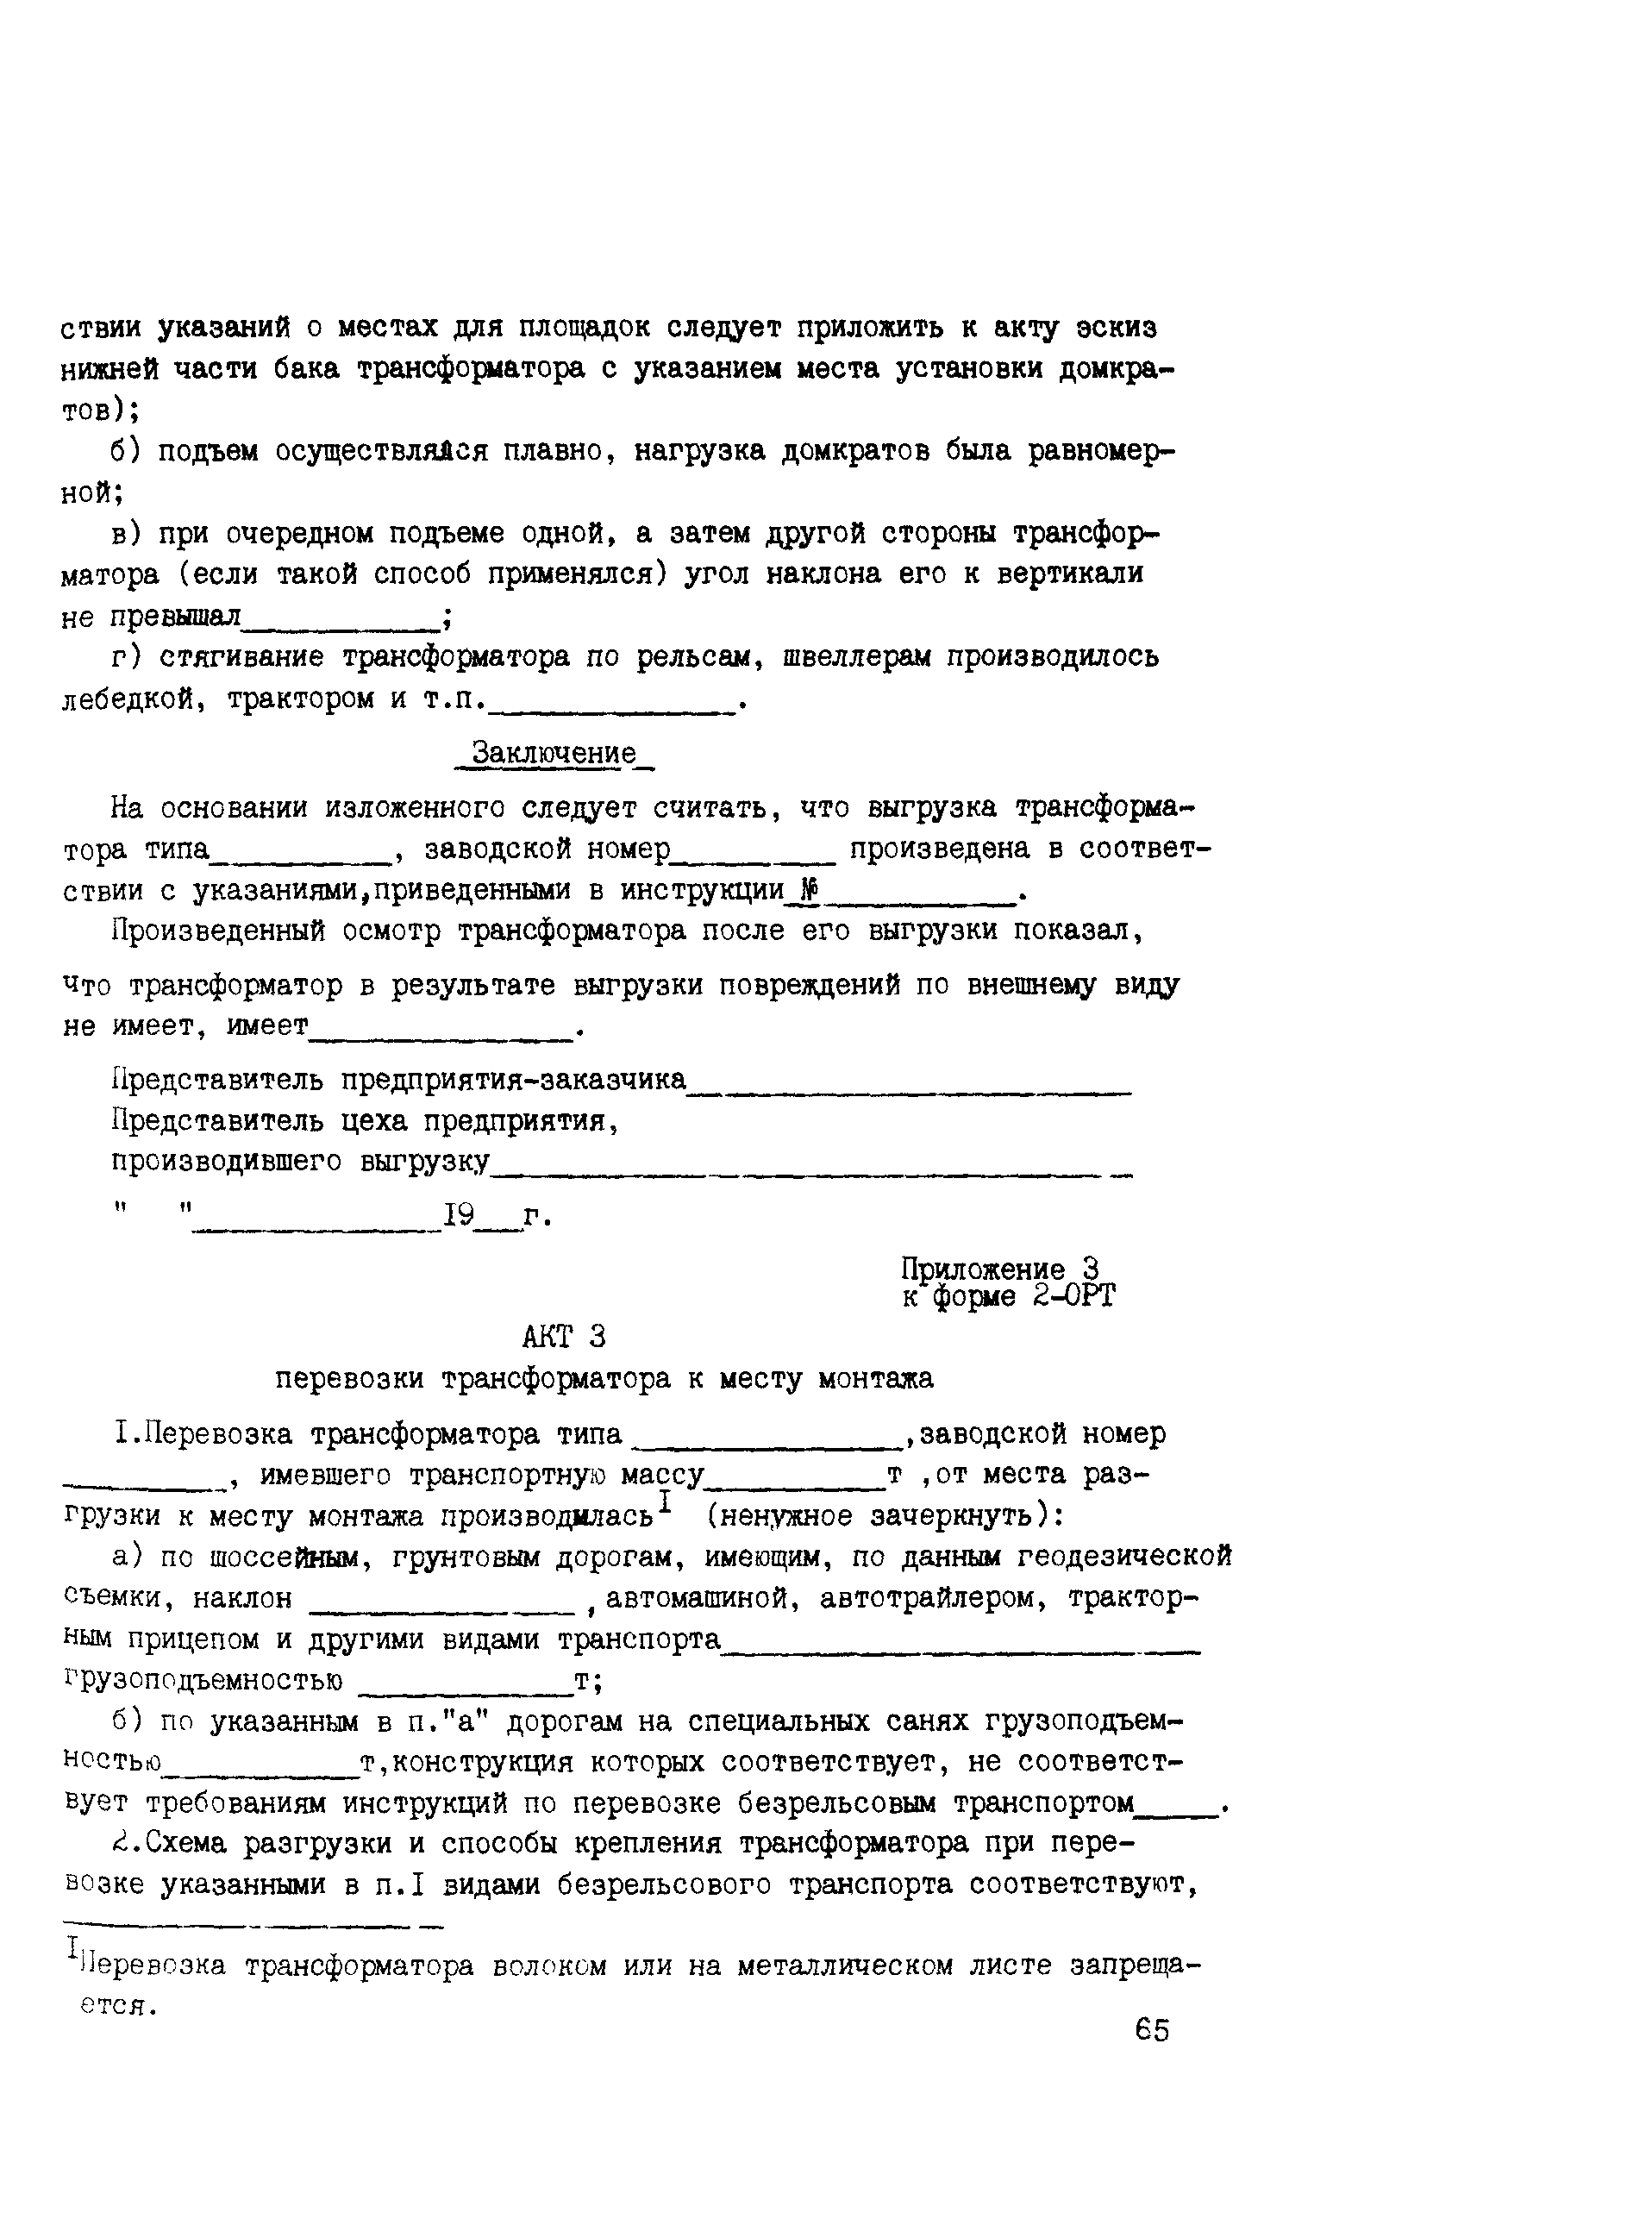 Сборник НТД к СНиП 3.05.06-85